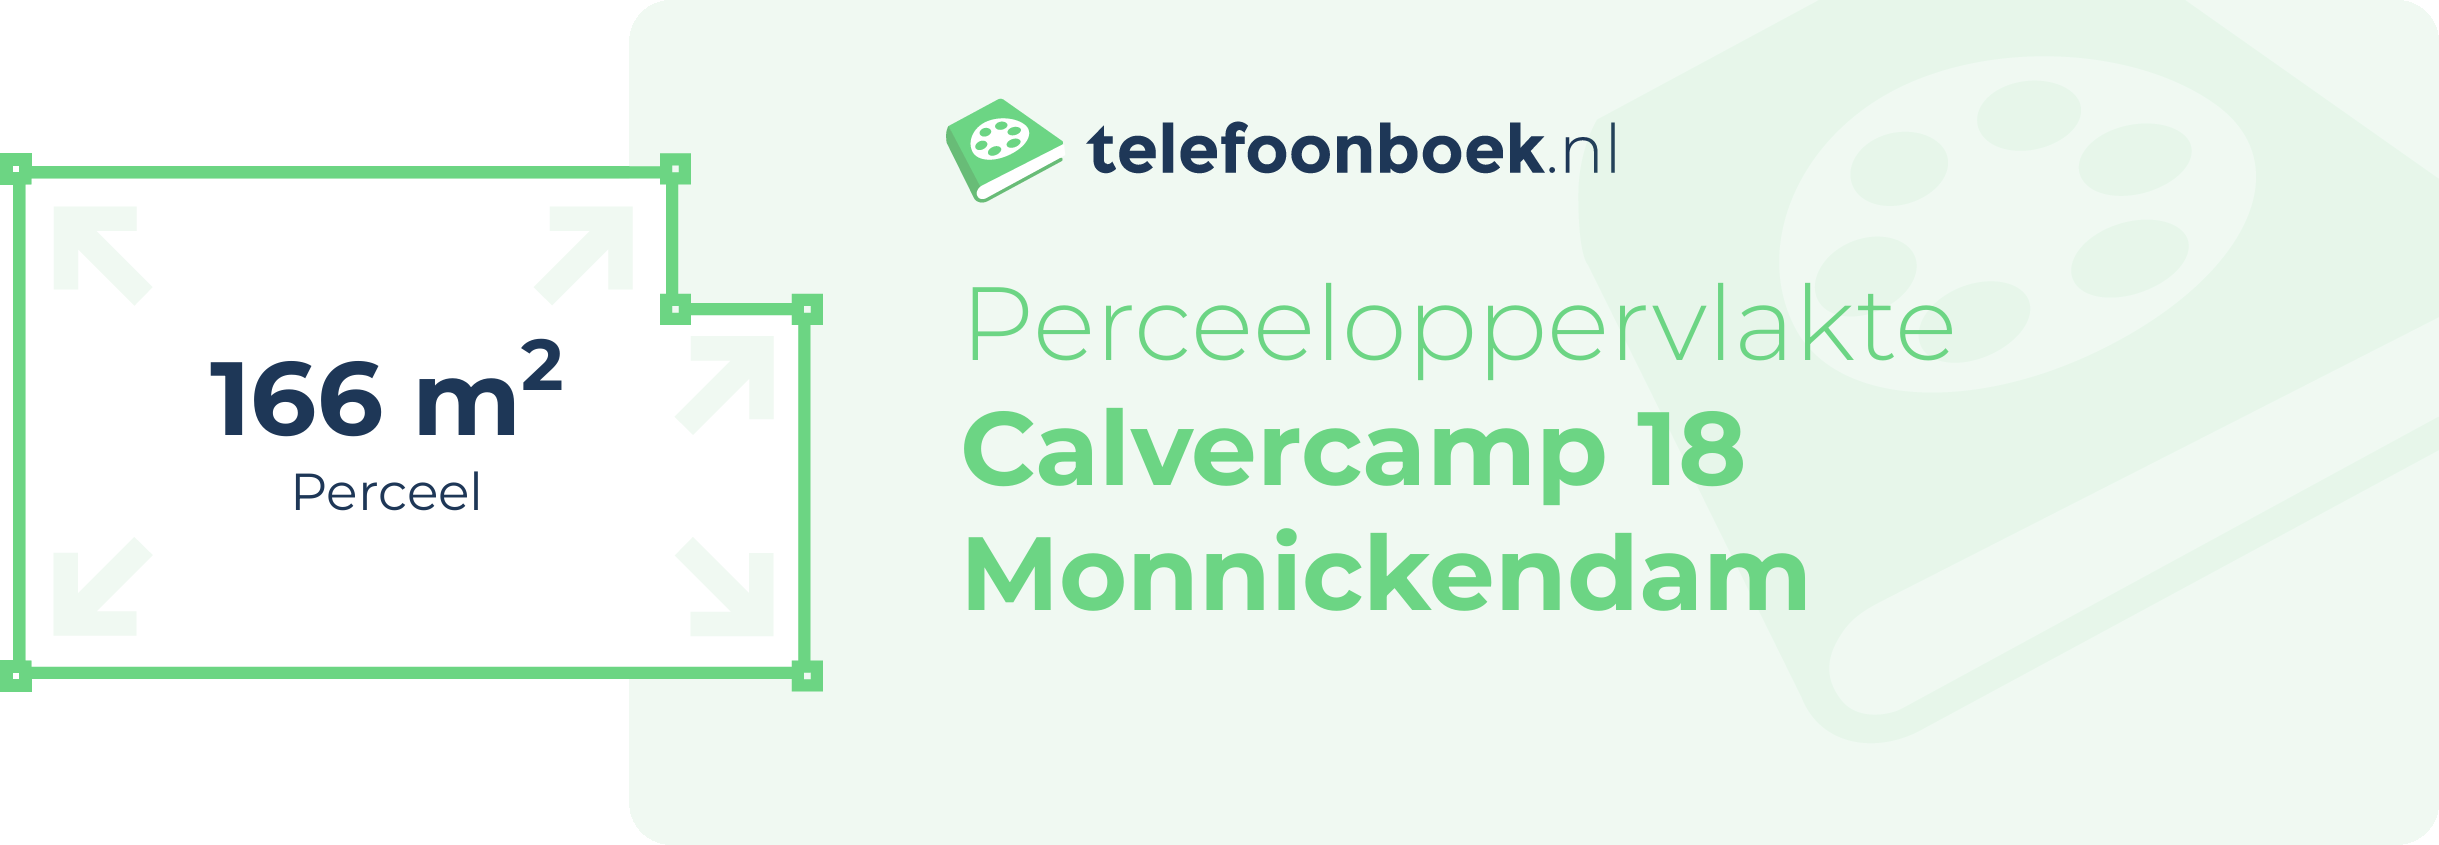 Perceeloppervlakte Calvercamp 18 Monnickendam